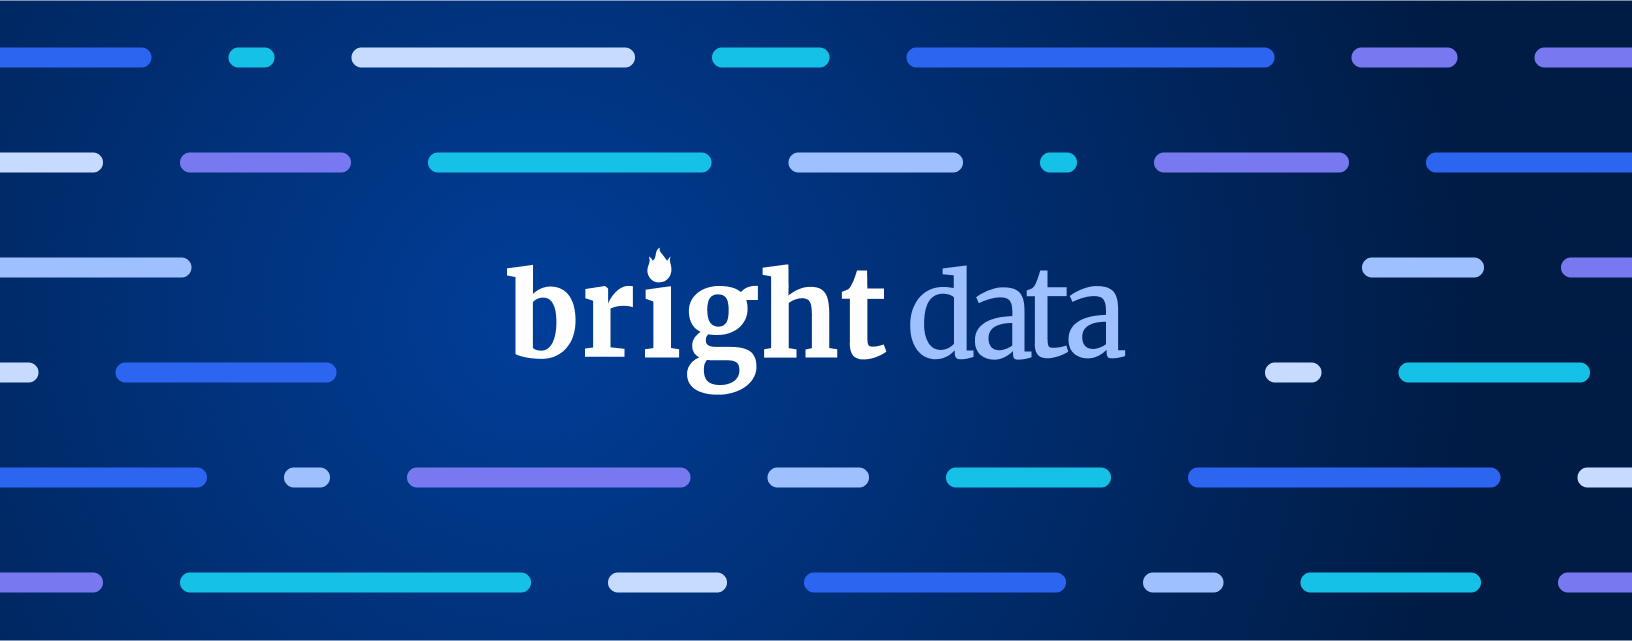 brightdata_desktop